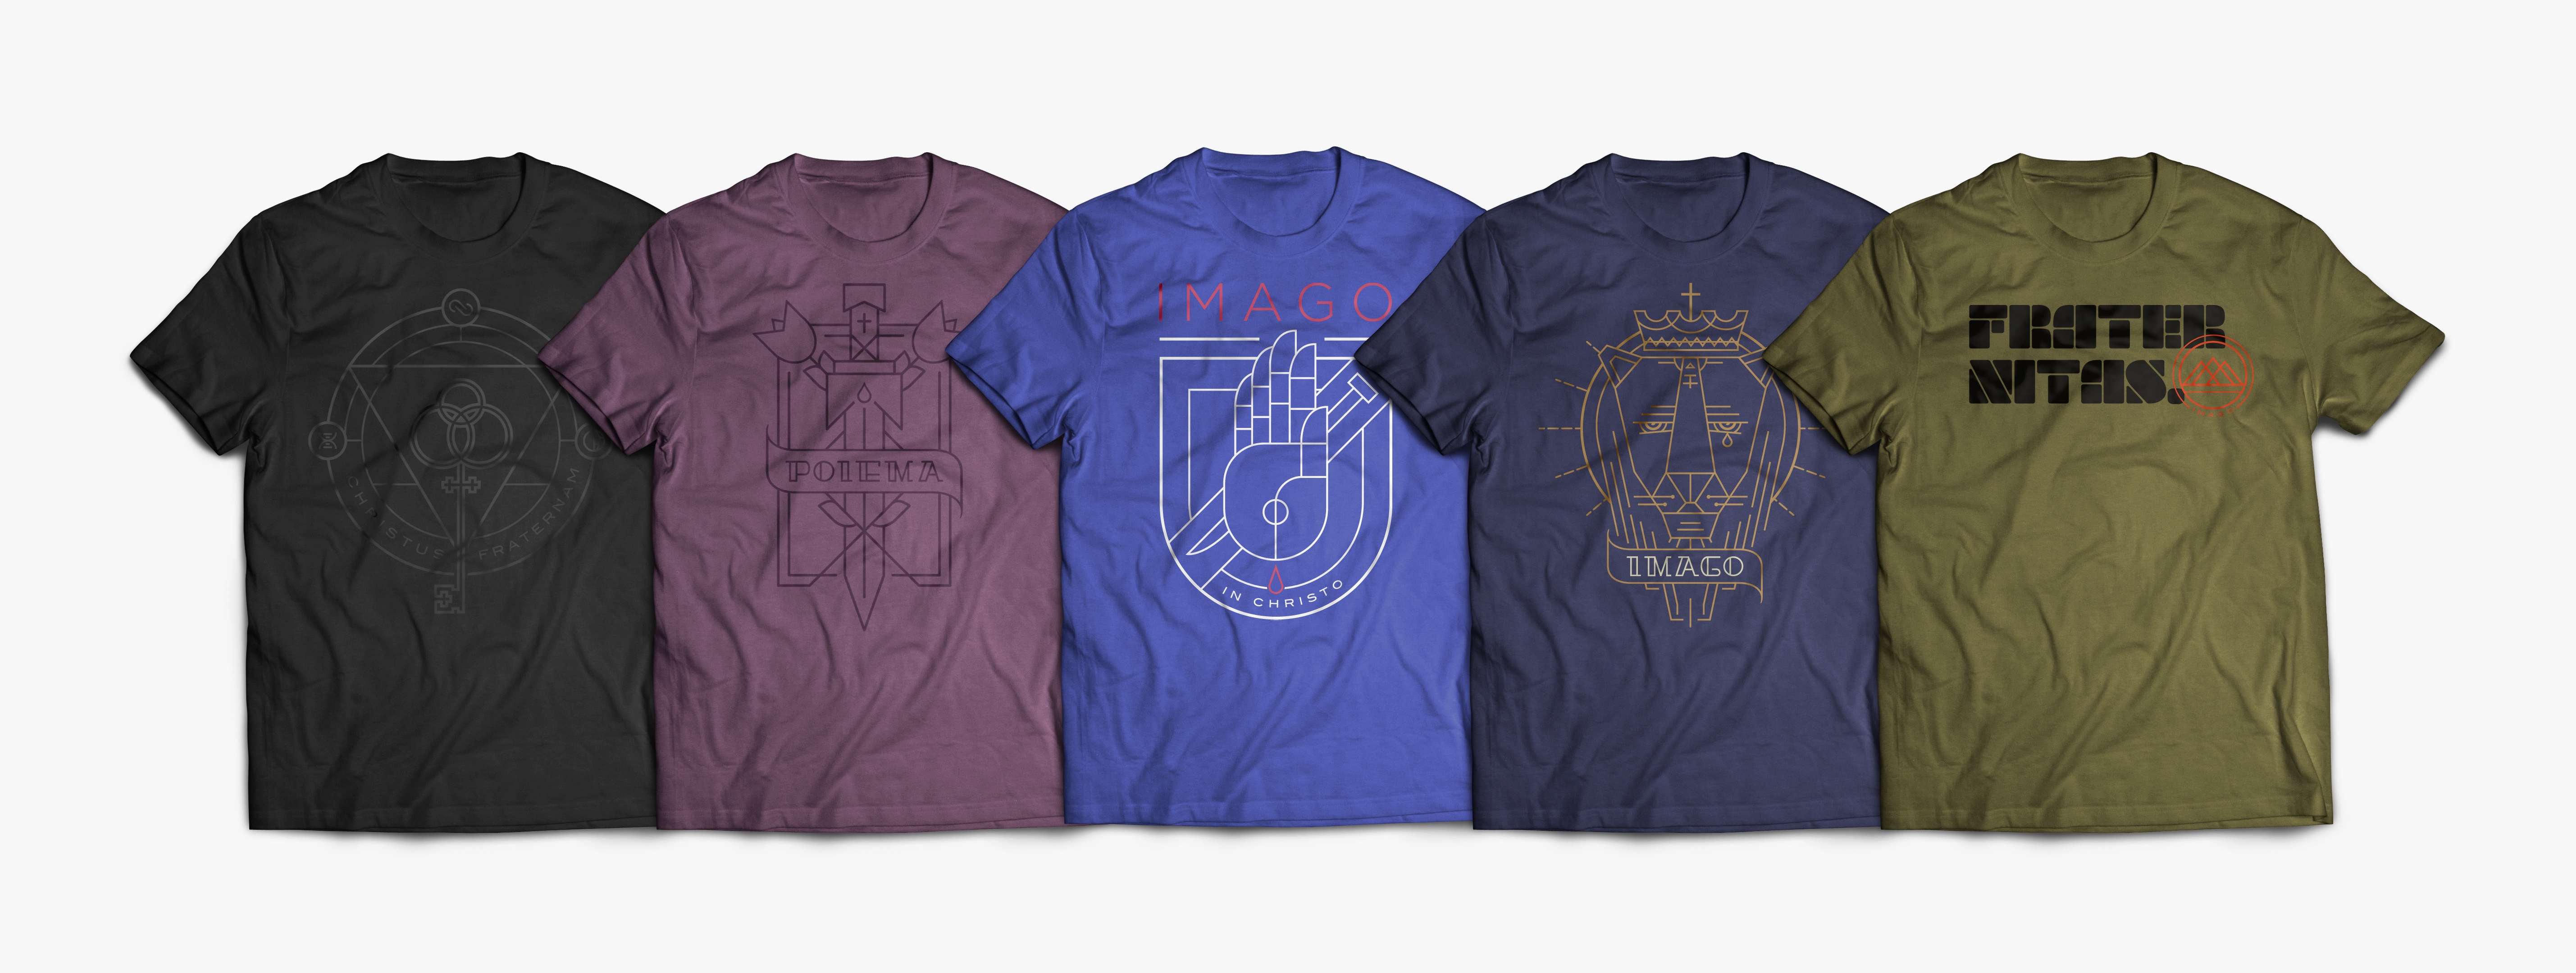 Terra Nova Church t-shirts